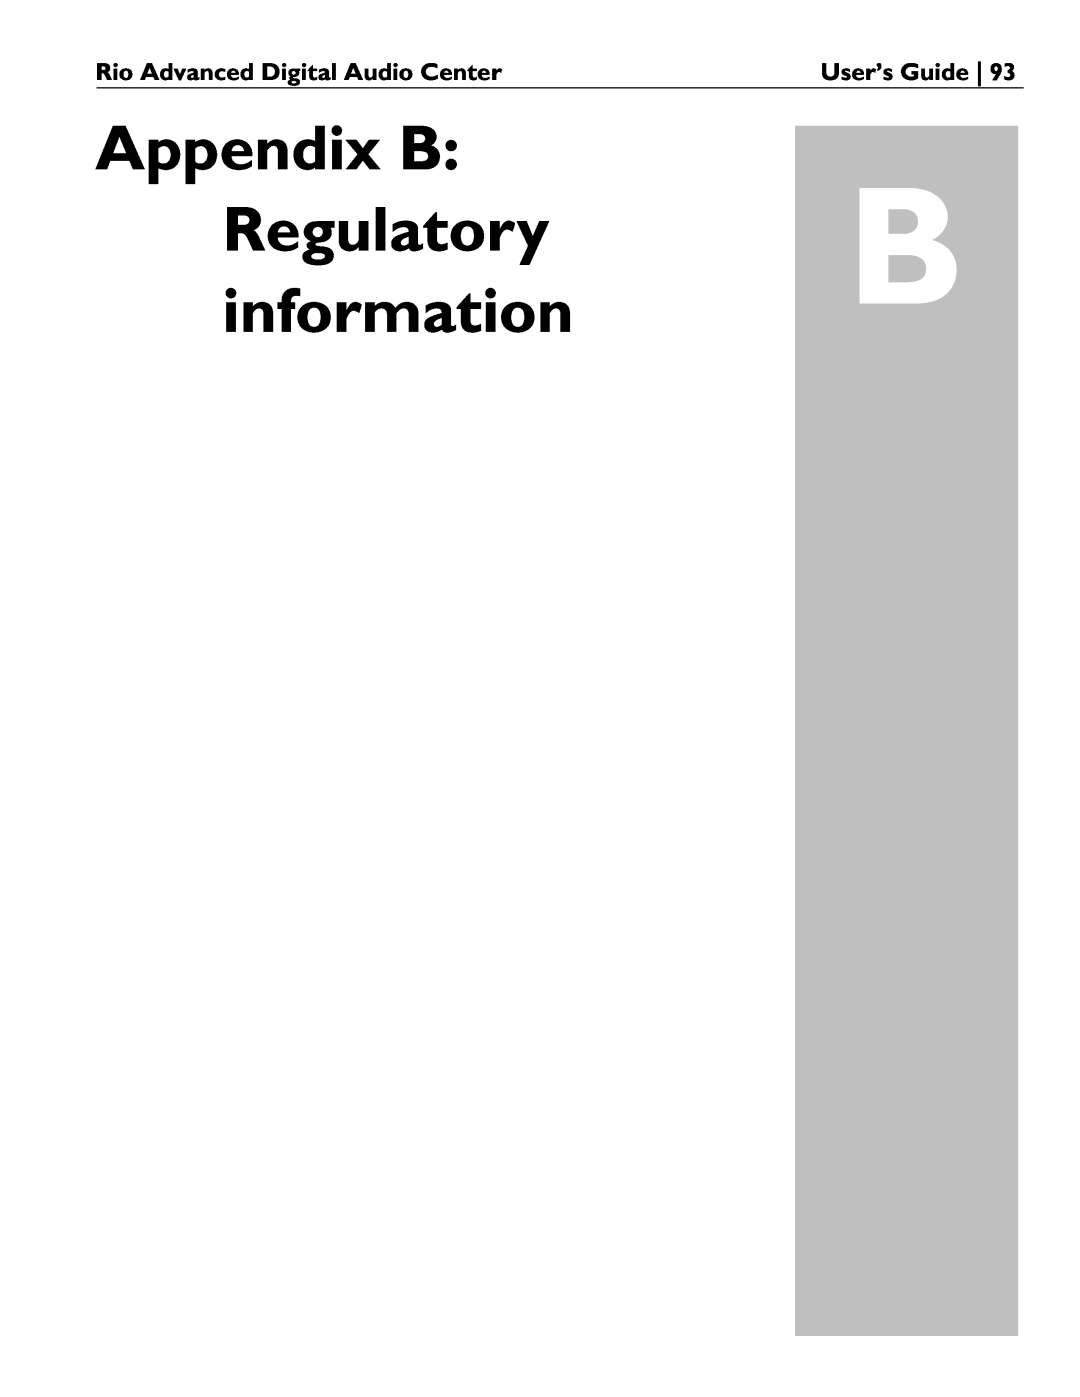 Rio Audio manual Appendix B RegulatoryB information, Rio Advanced Digital Audio Center, User’s Guide 